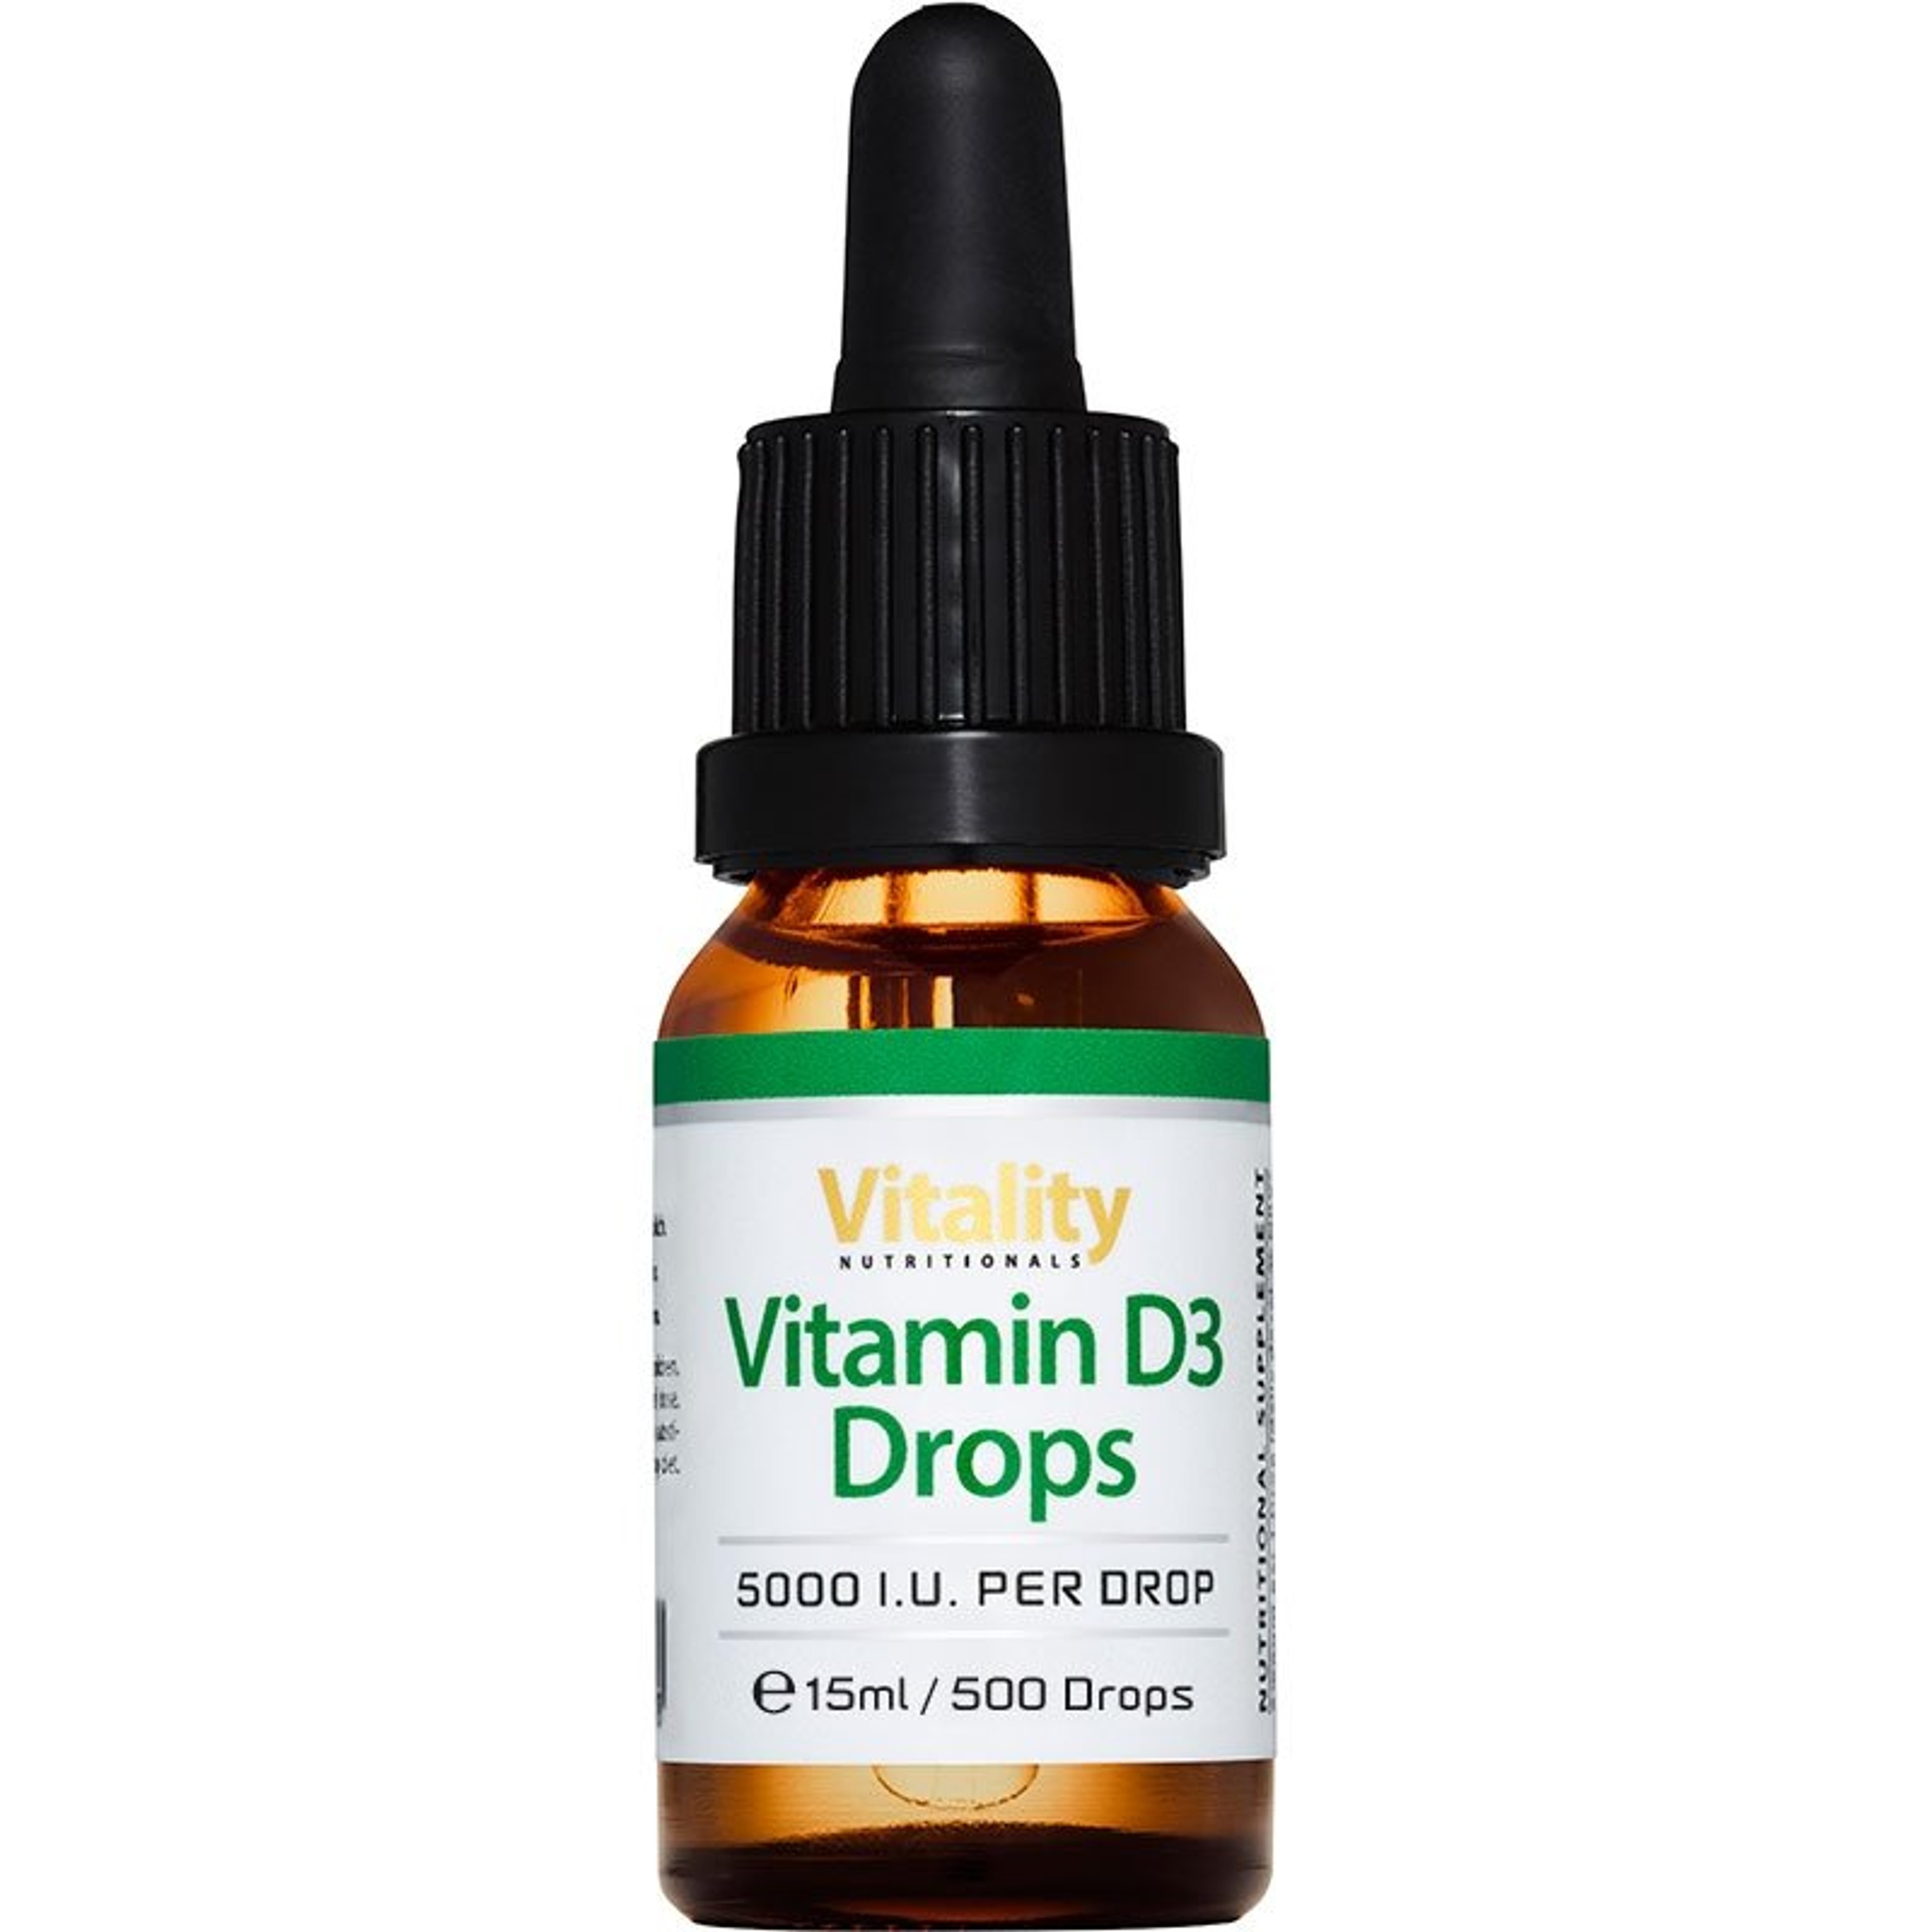 vitality-nutritionals-vitamin-d3-drops-5000_1.jpg